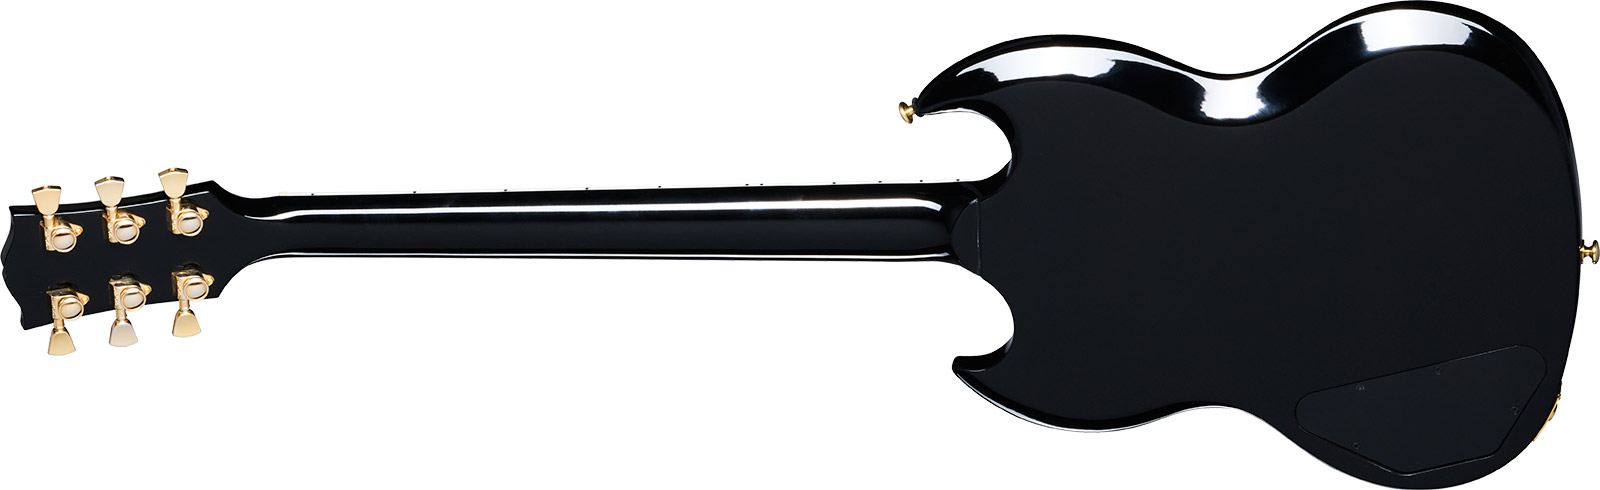 Gibson Sg Supreme Usa 2h Ht Rw - Fireburst - Double cut electric guitar - Variation 1